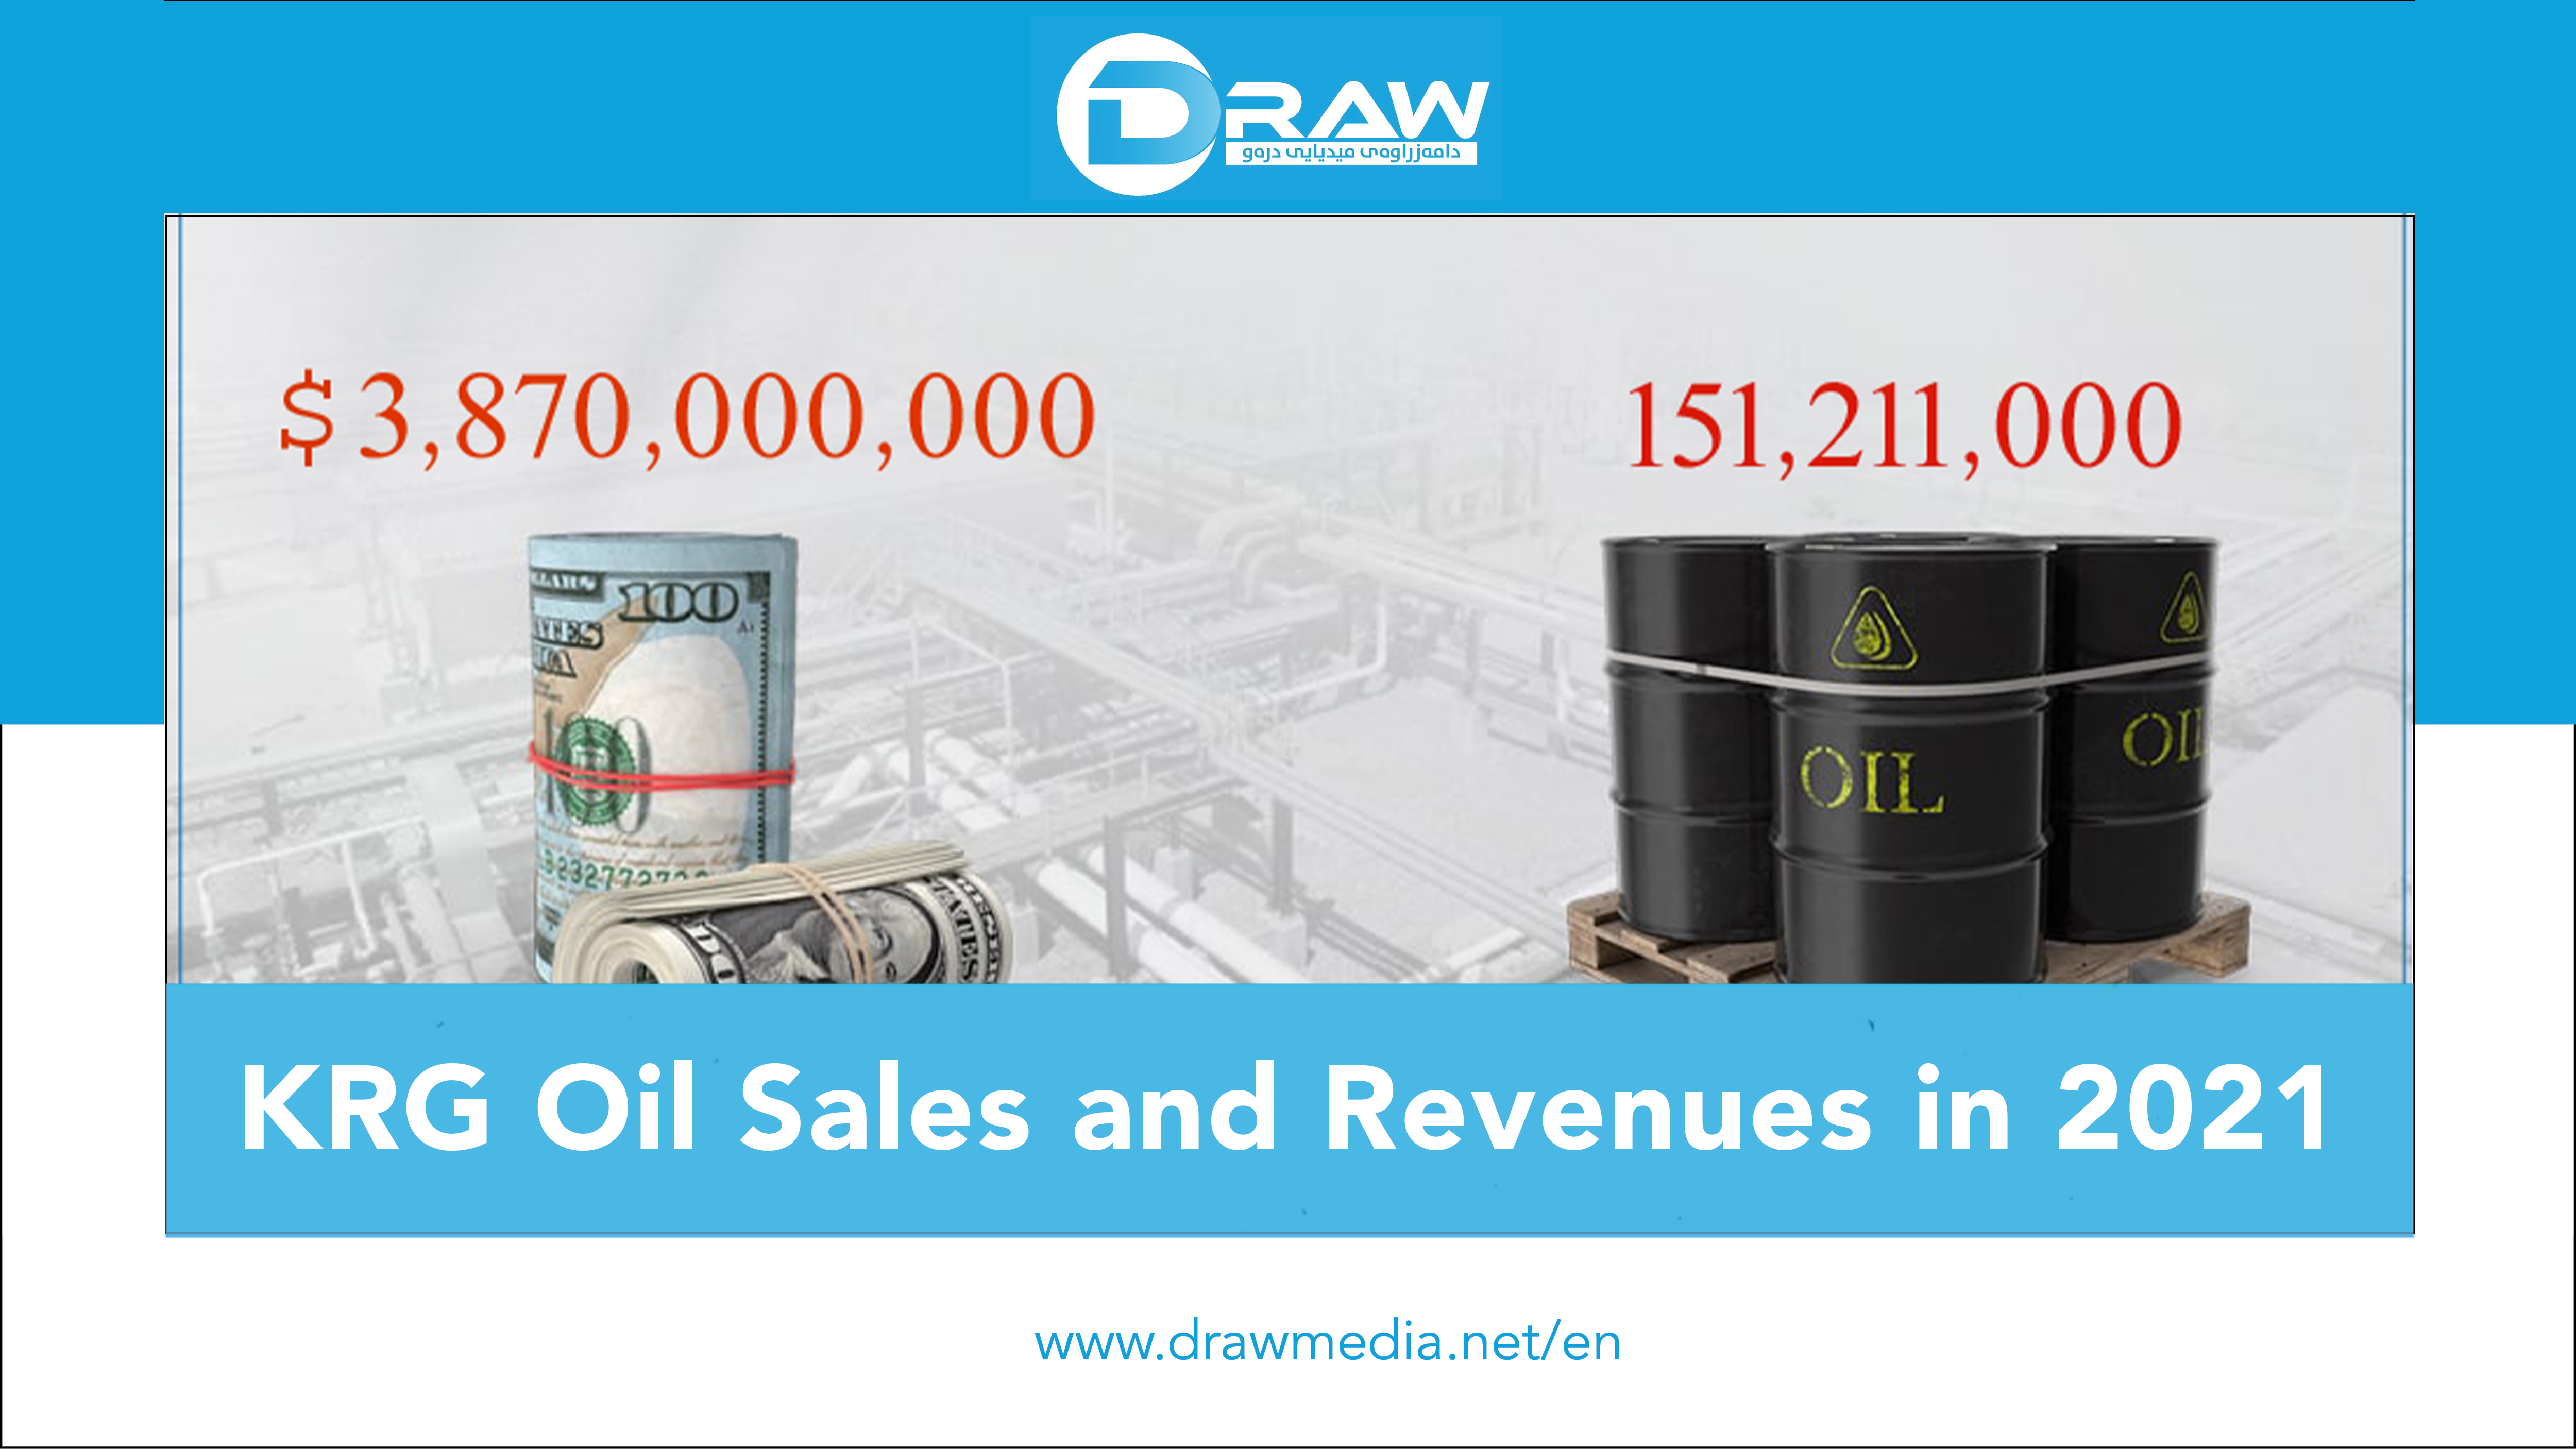 DrawMedia.net / KRG Oil Sales and Revenues in 2021